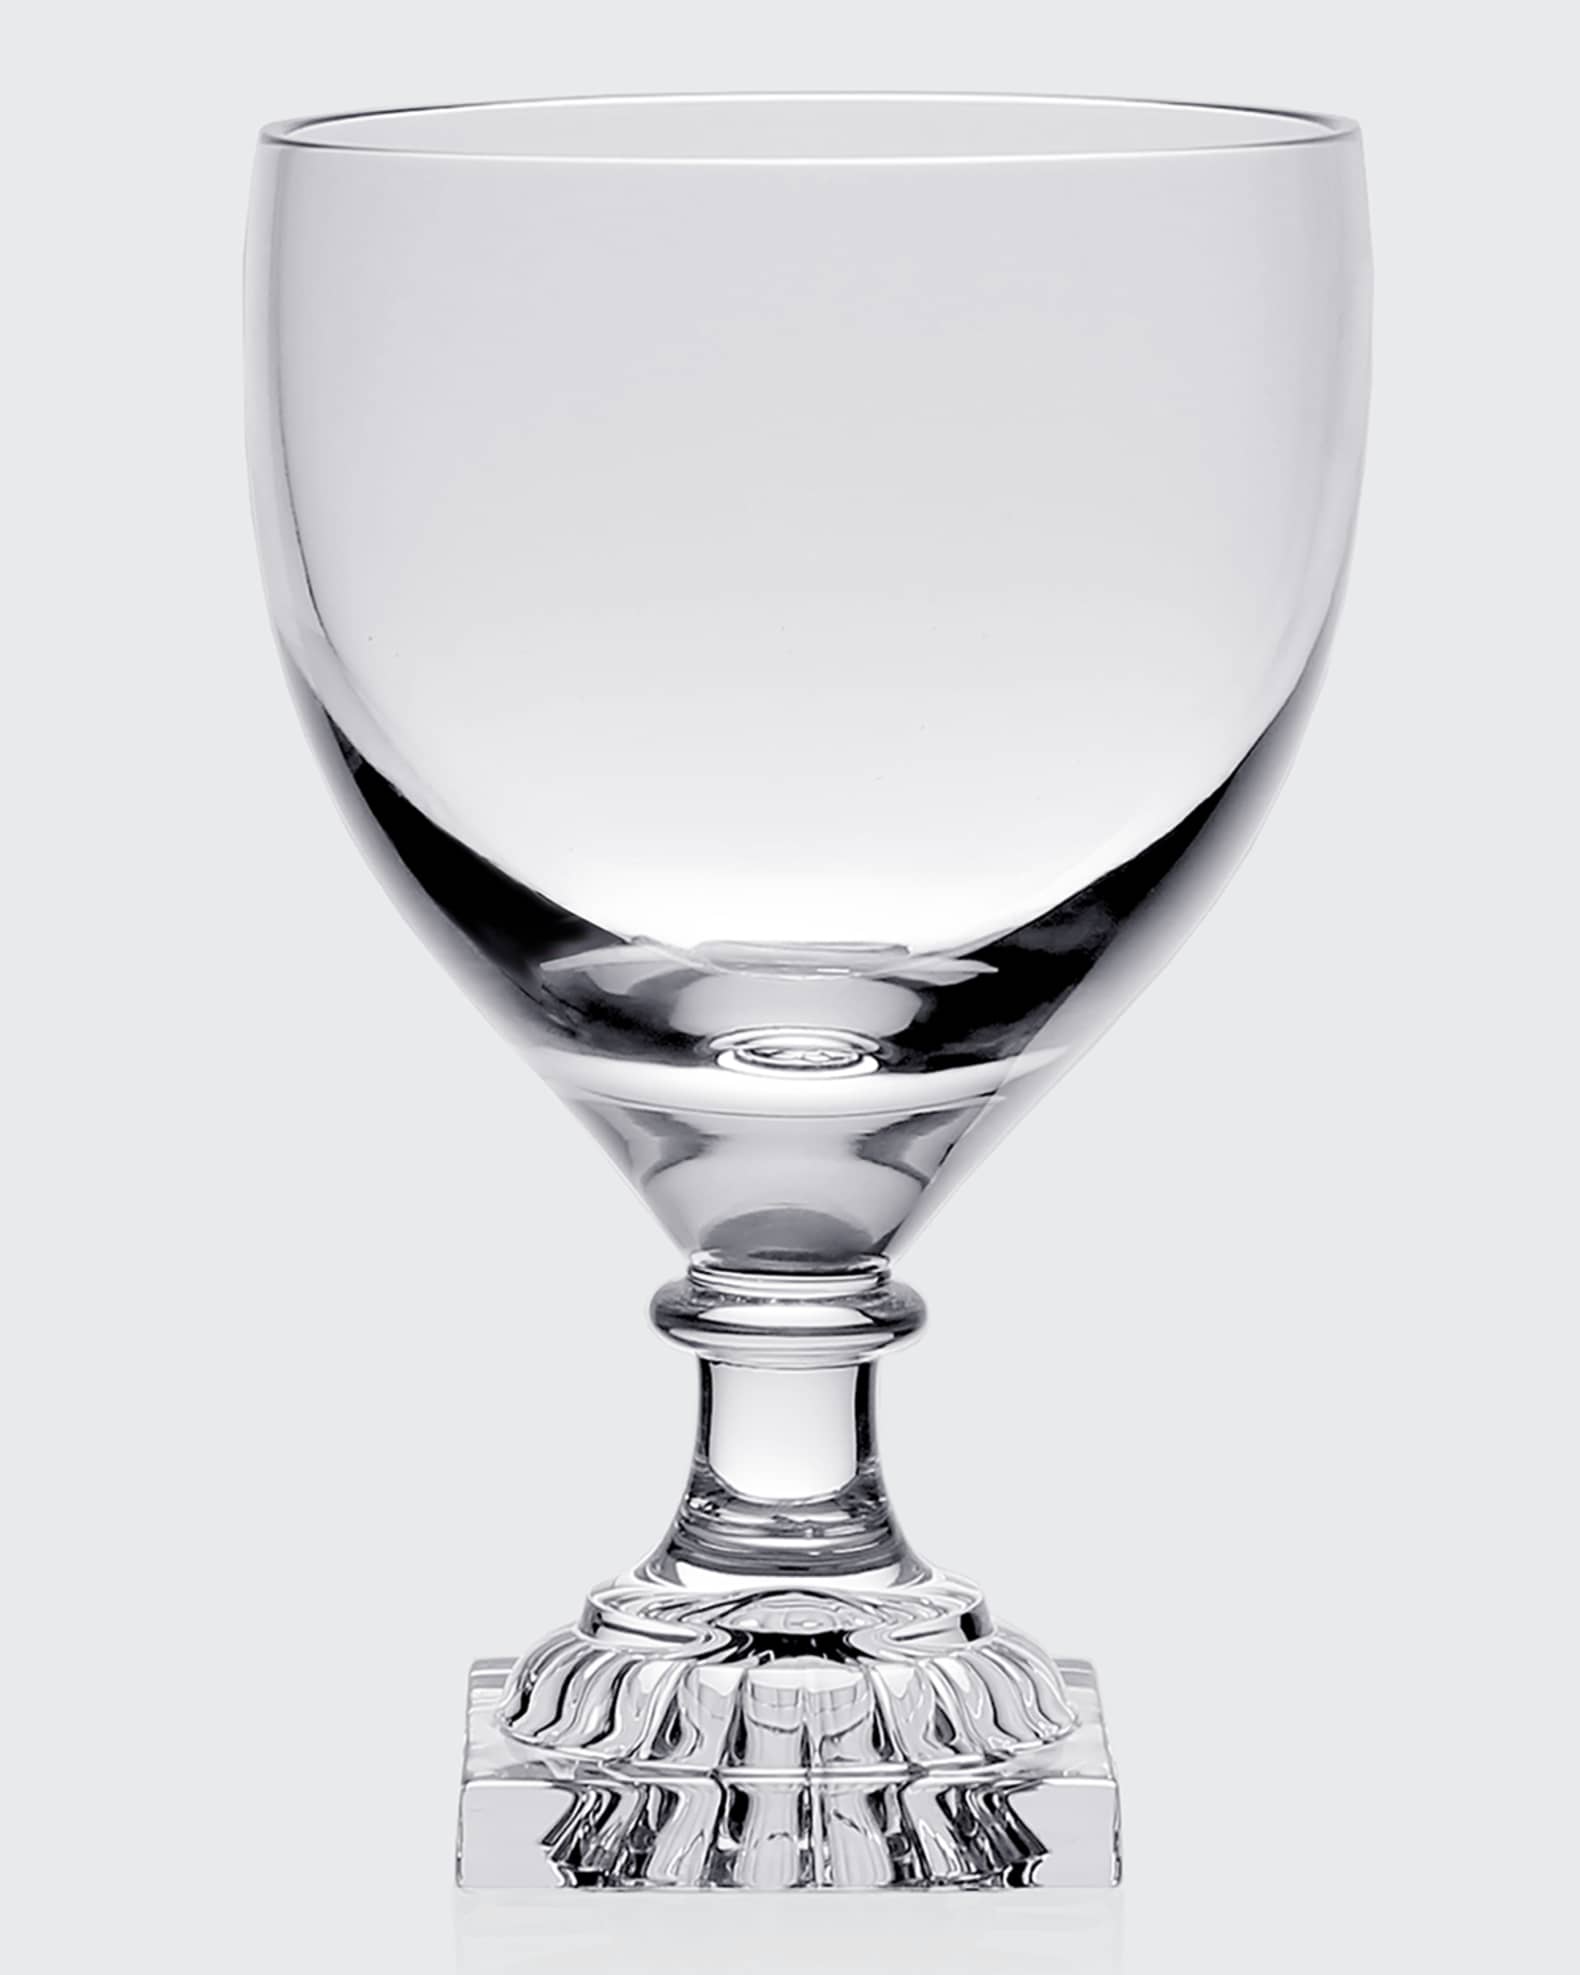 The Gigantic Wine Glass